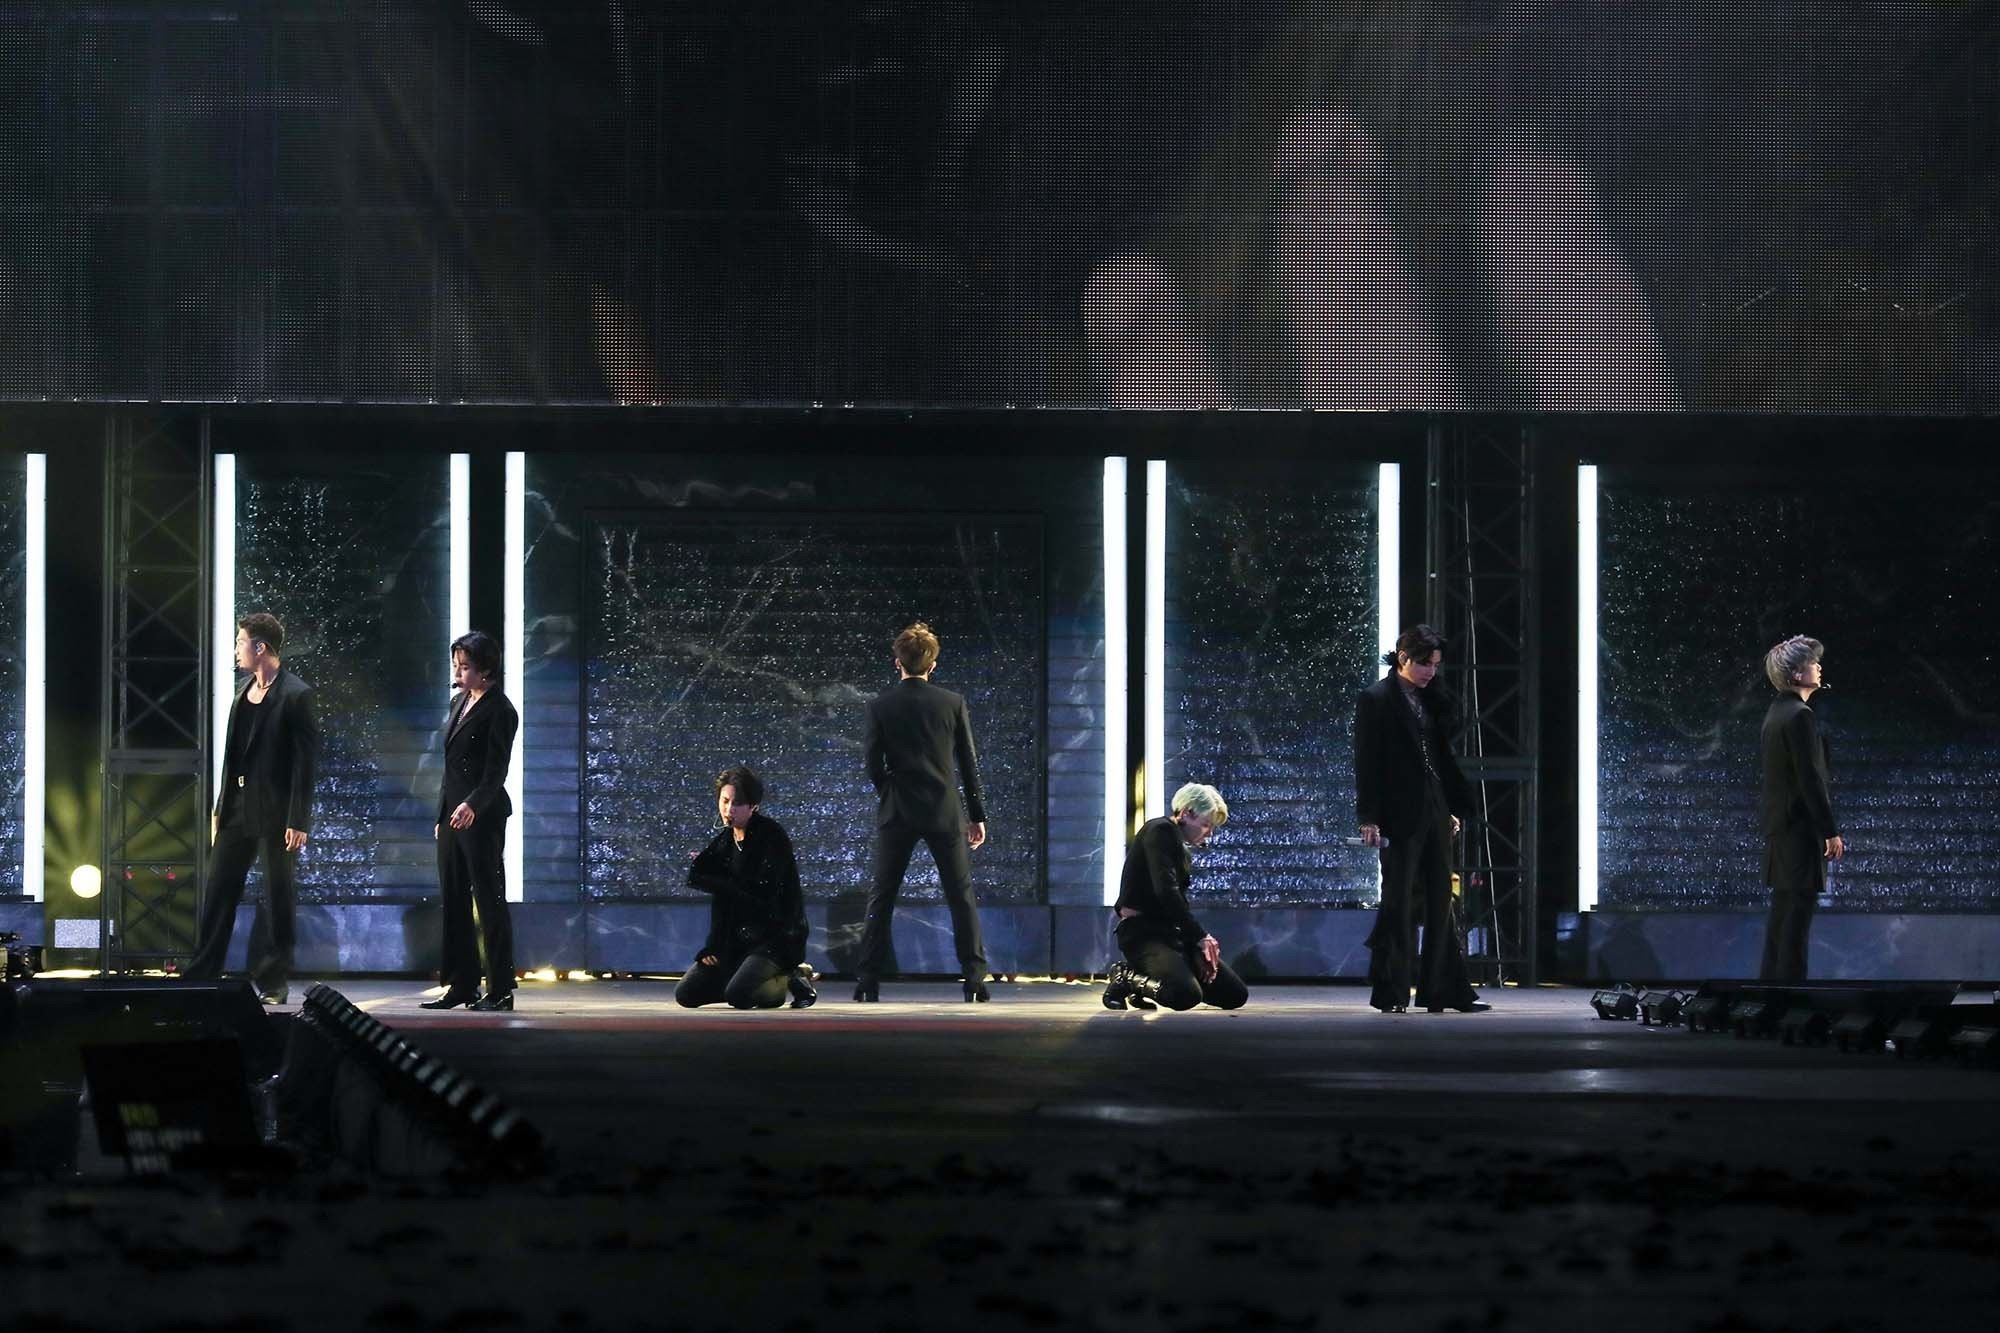 『BTS PERMISSION TO DANCE ON STAGE』より (P)&(C)BIGHIT MUSIC